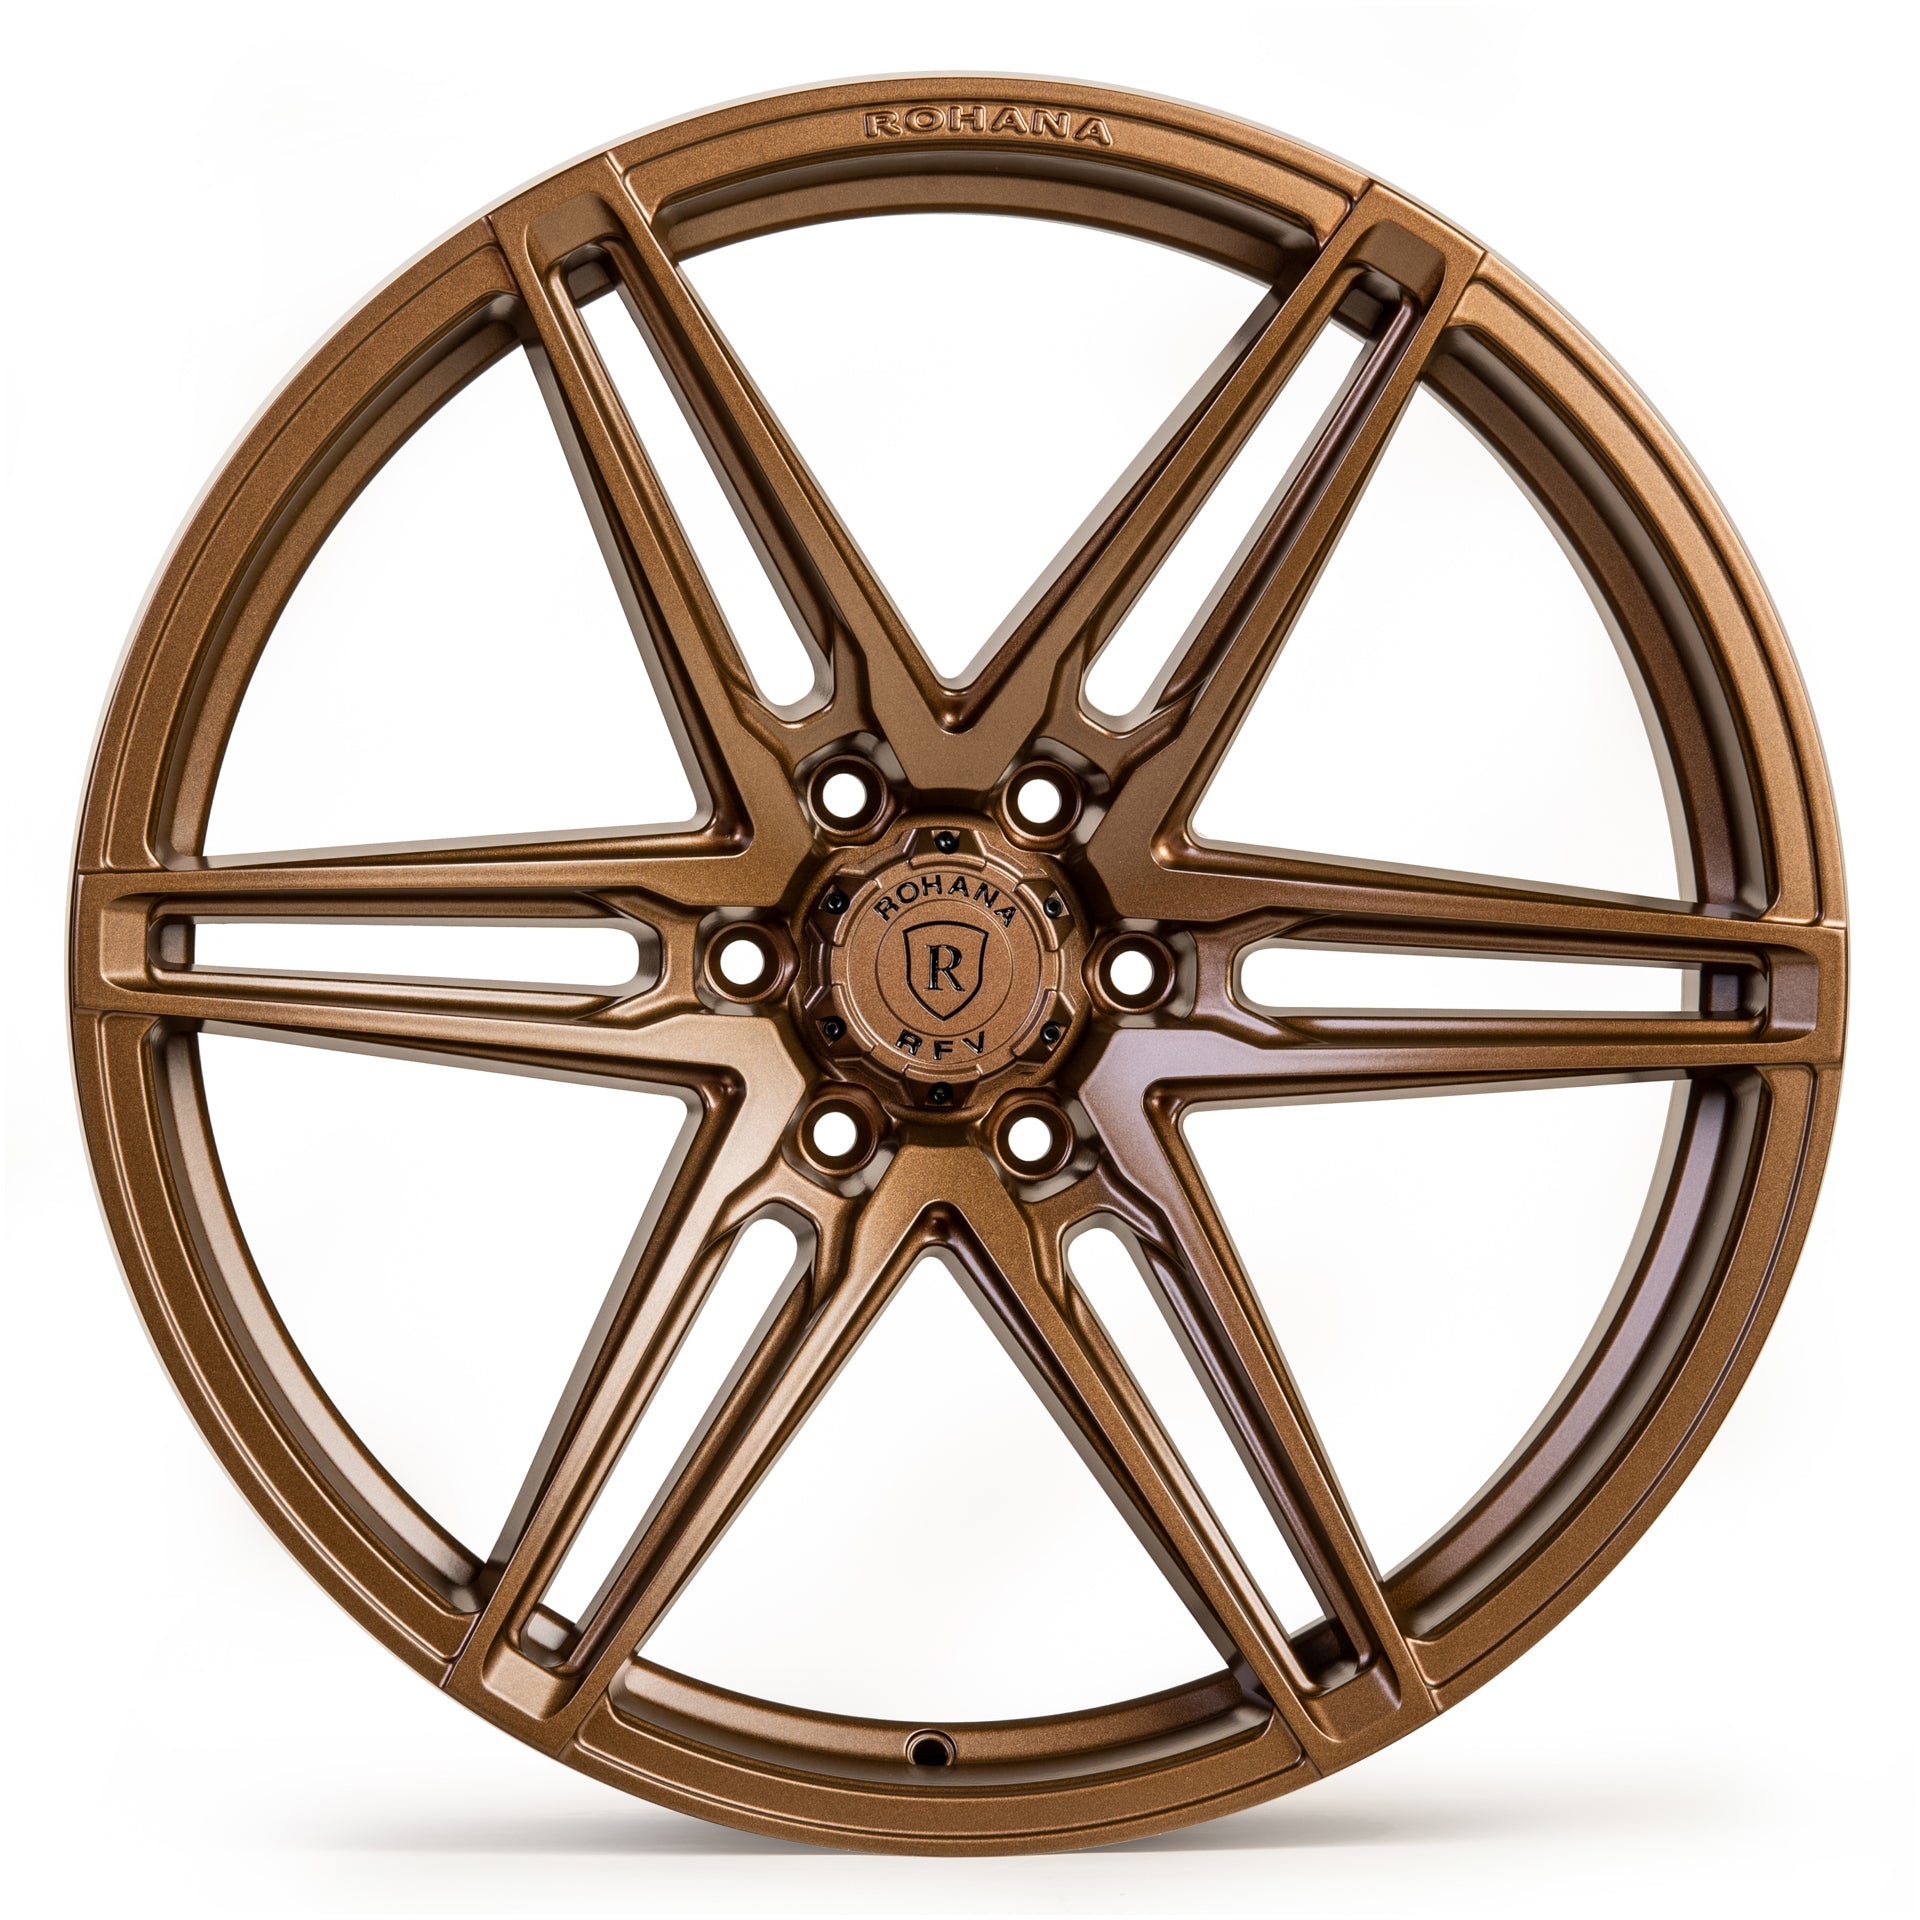 22" Rohana RFV1 Wheels - Set of 4 - Concave Rotary Forged - Motorsports LA